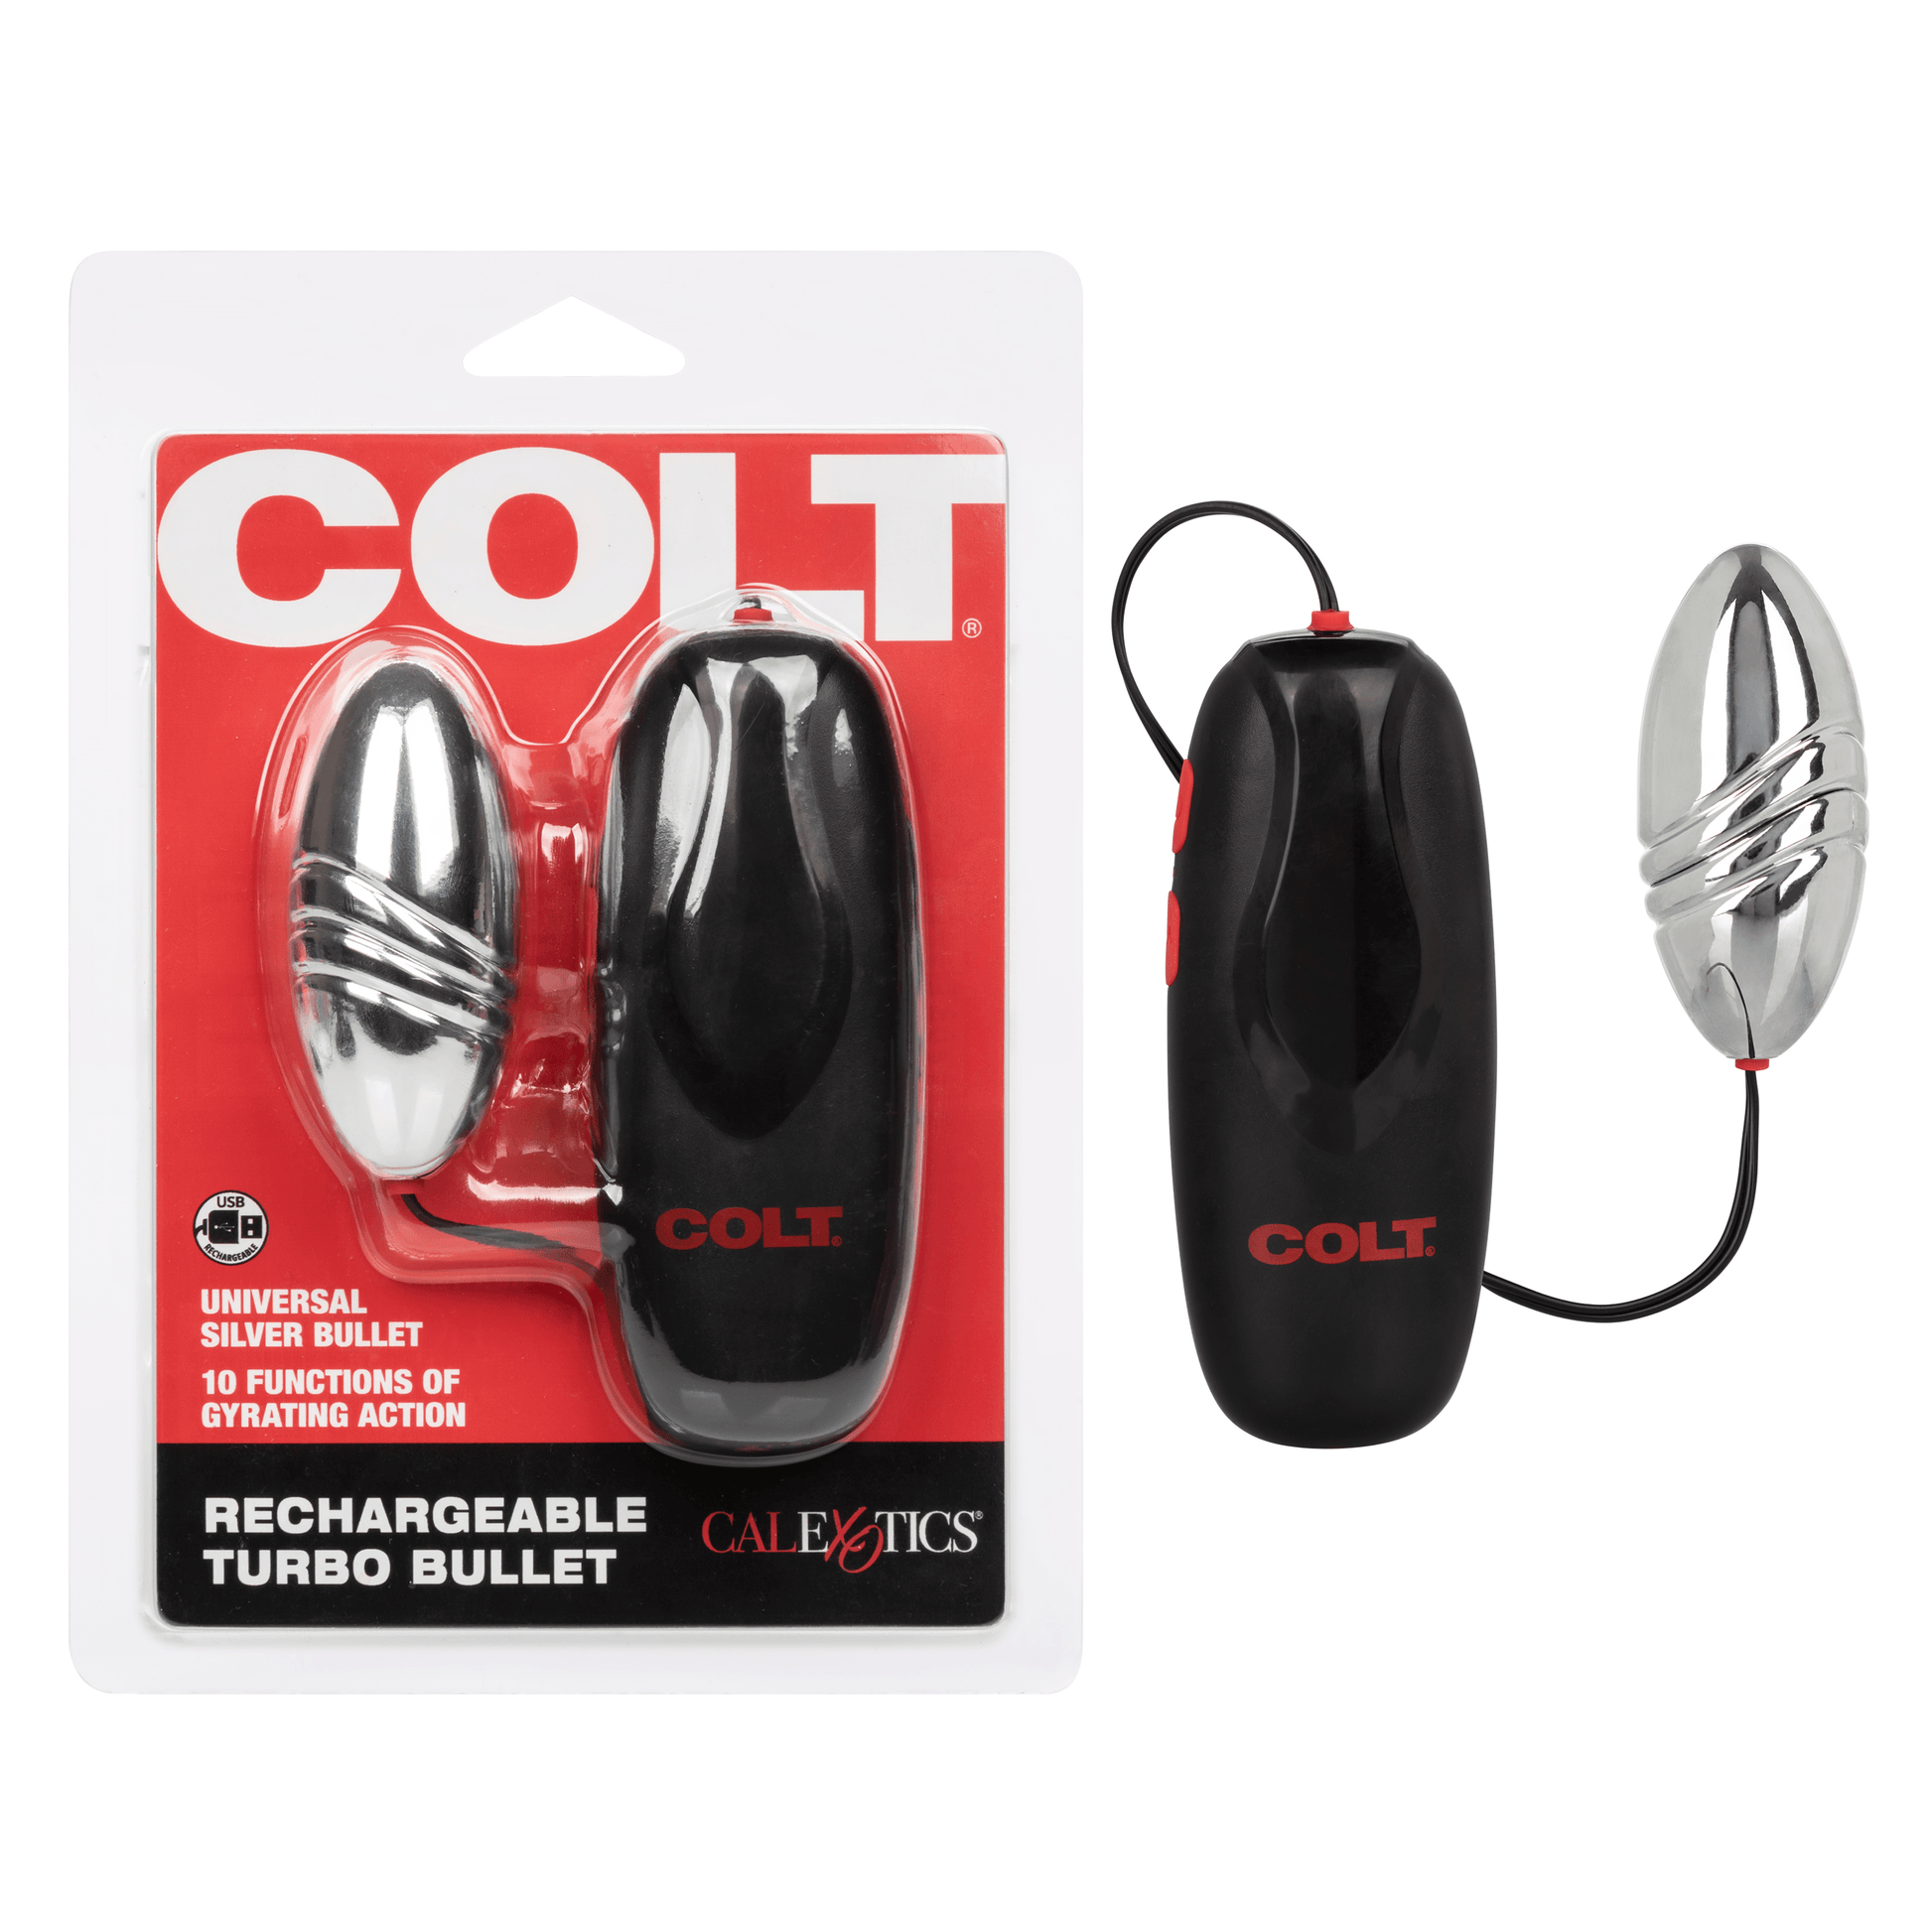 Colt Rechargeable Turbo Bullet - Take A Peek